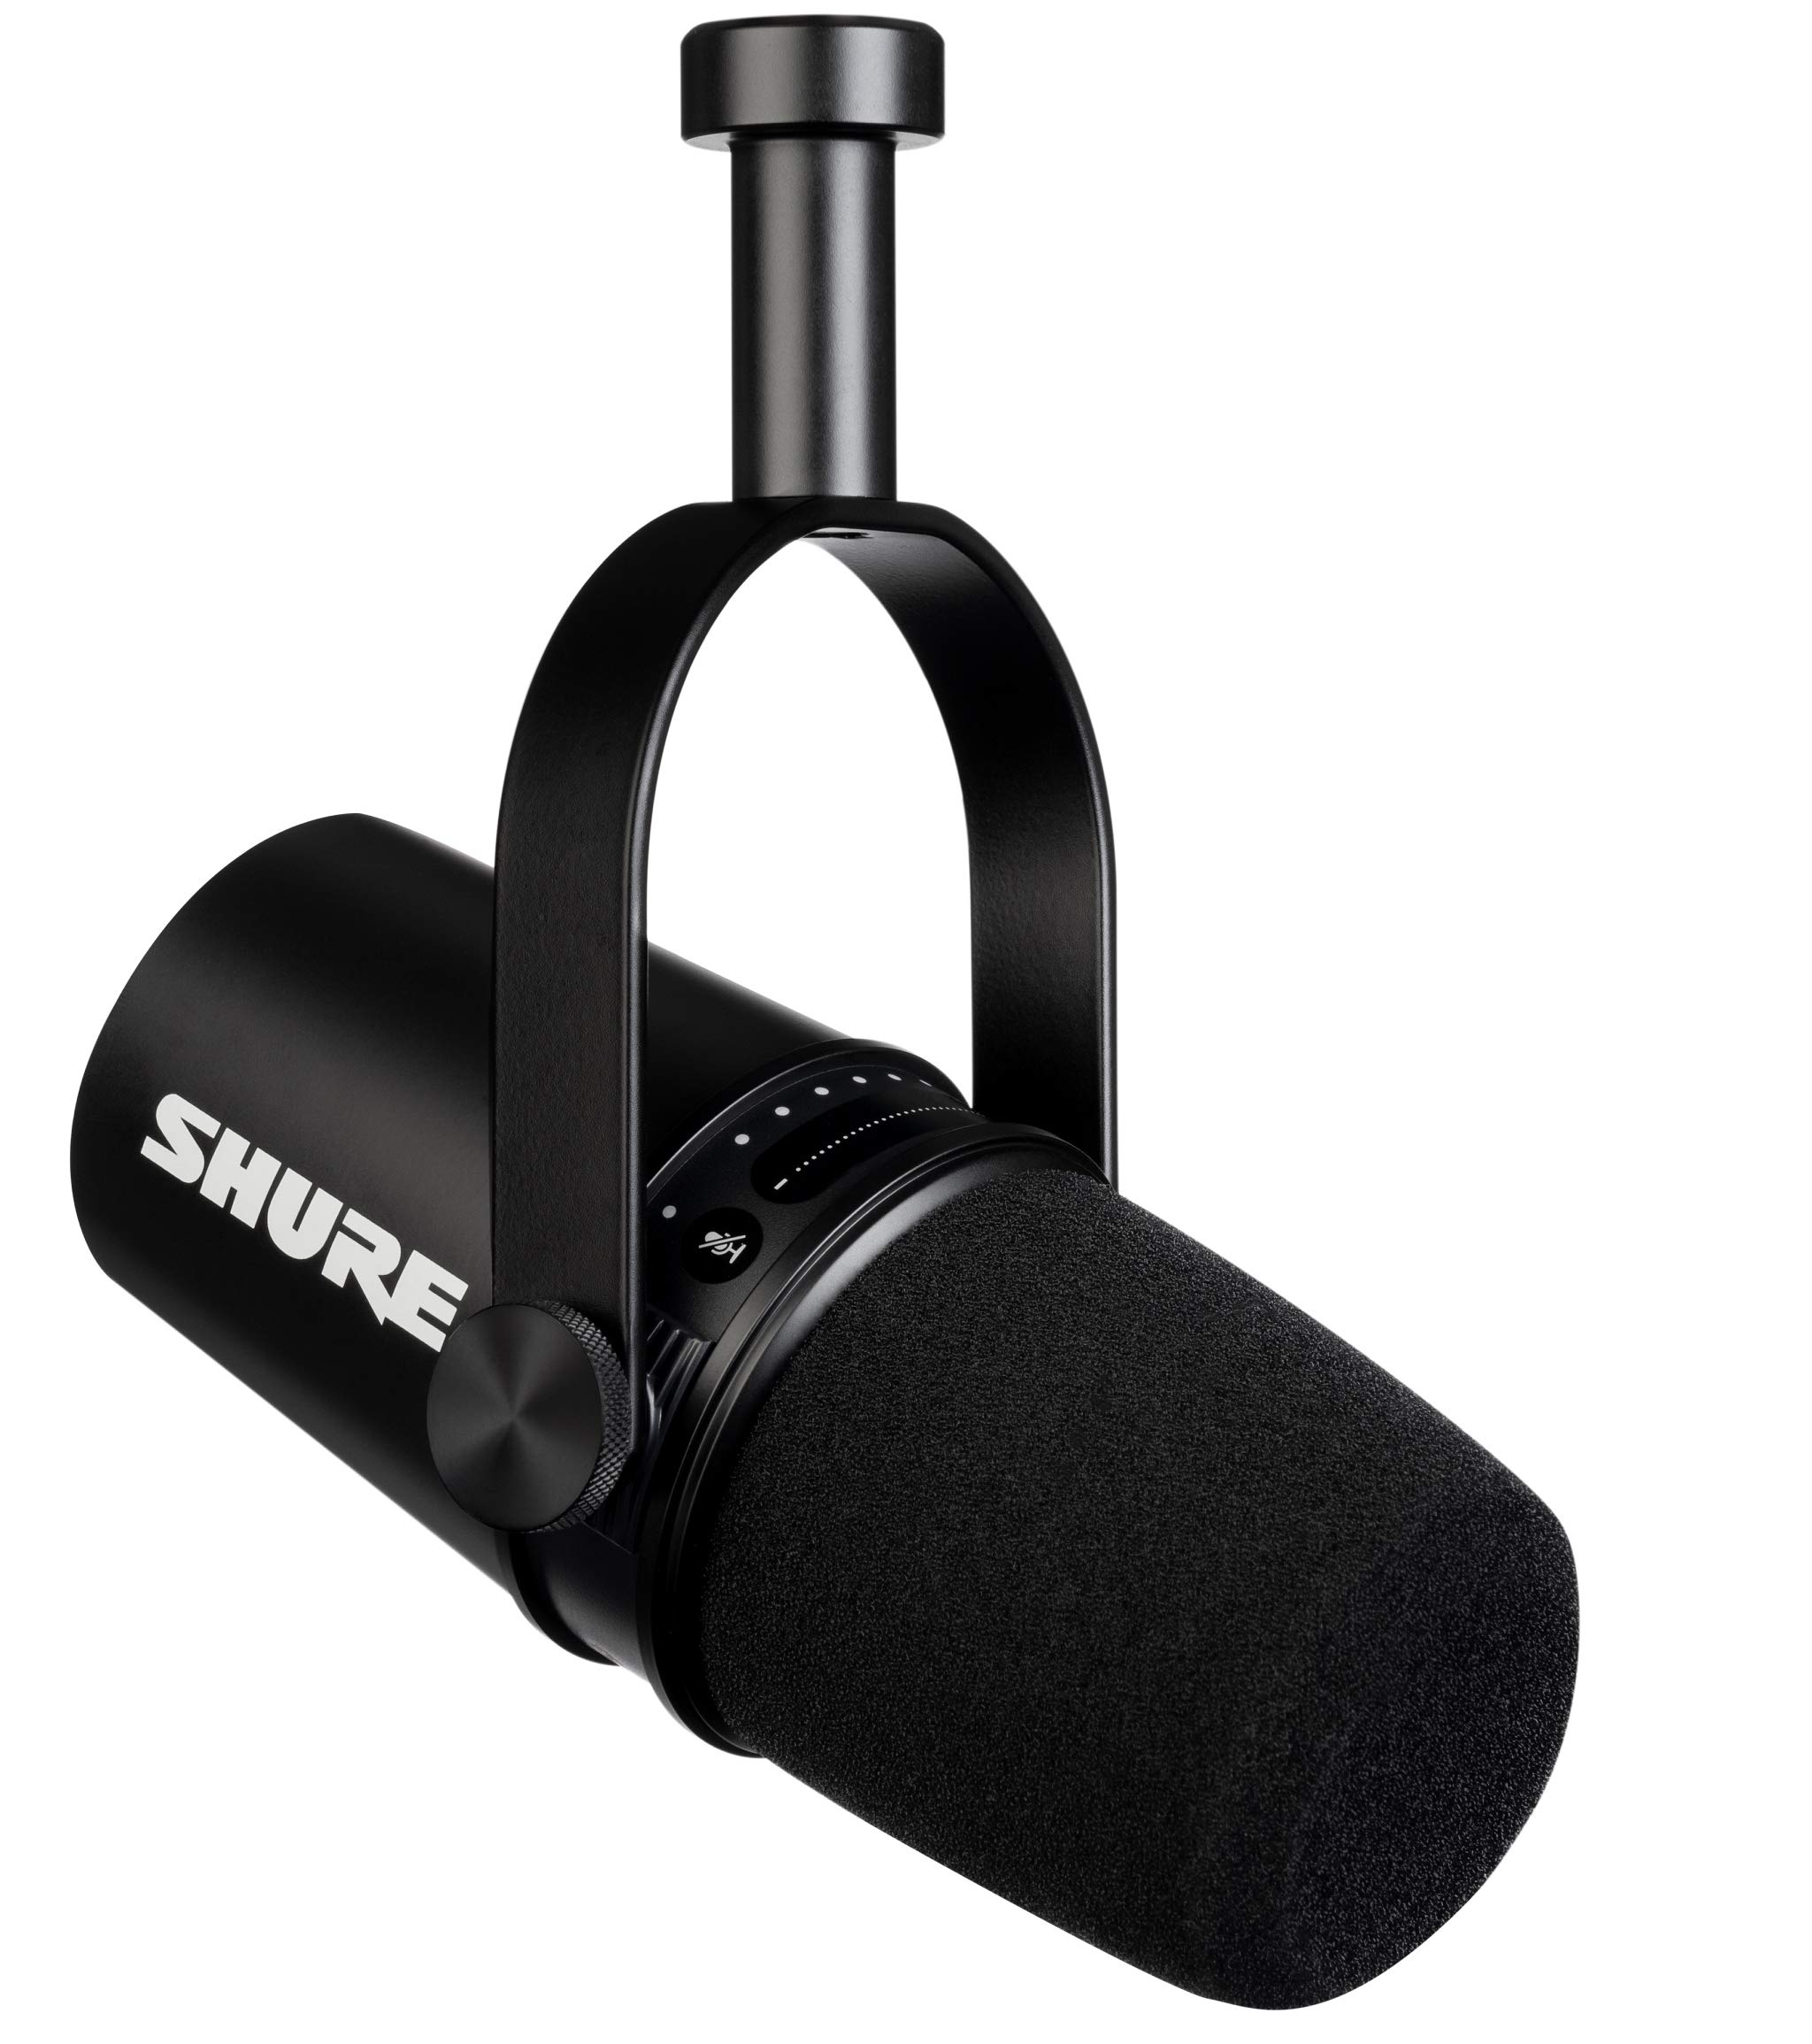 Shure MV7 USB Microphone for Podcasting, Recording, Liv...